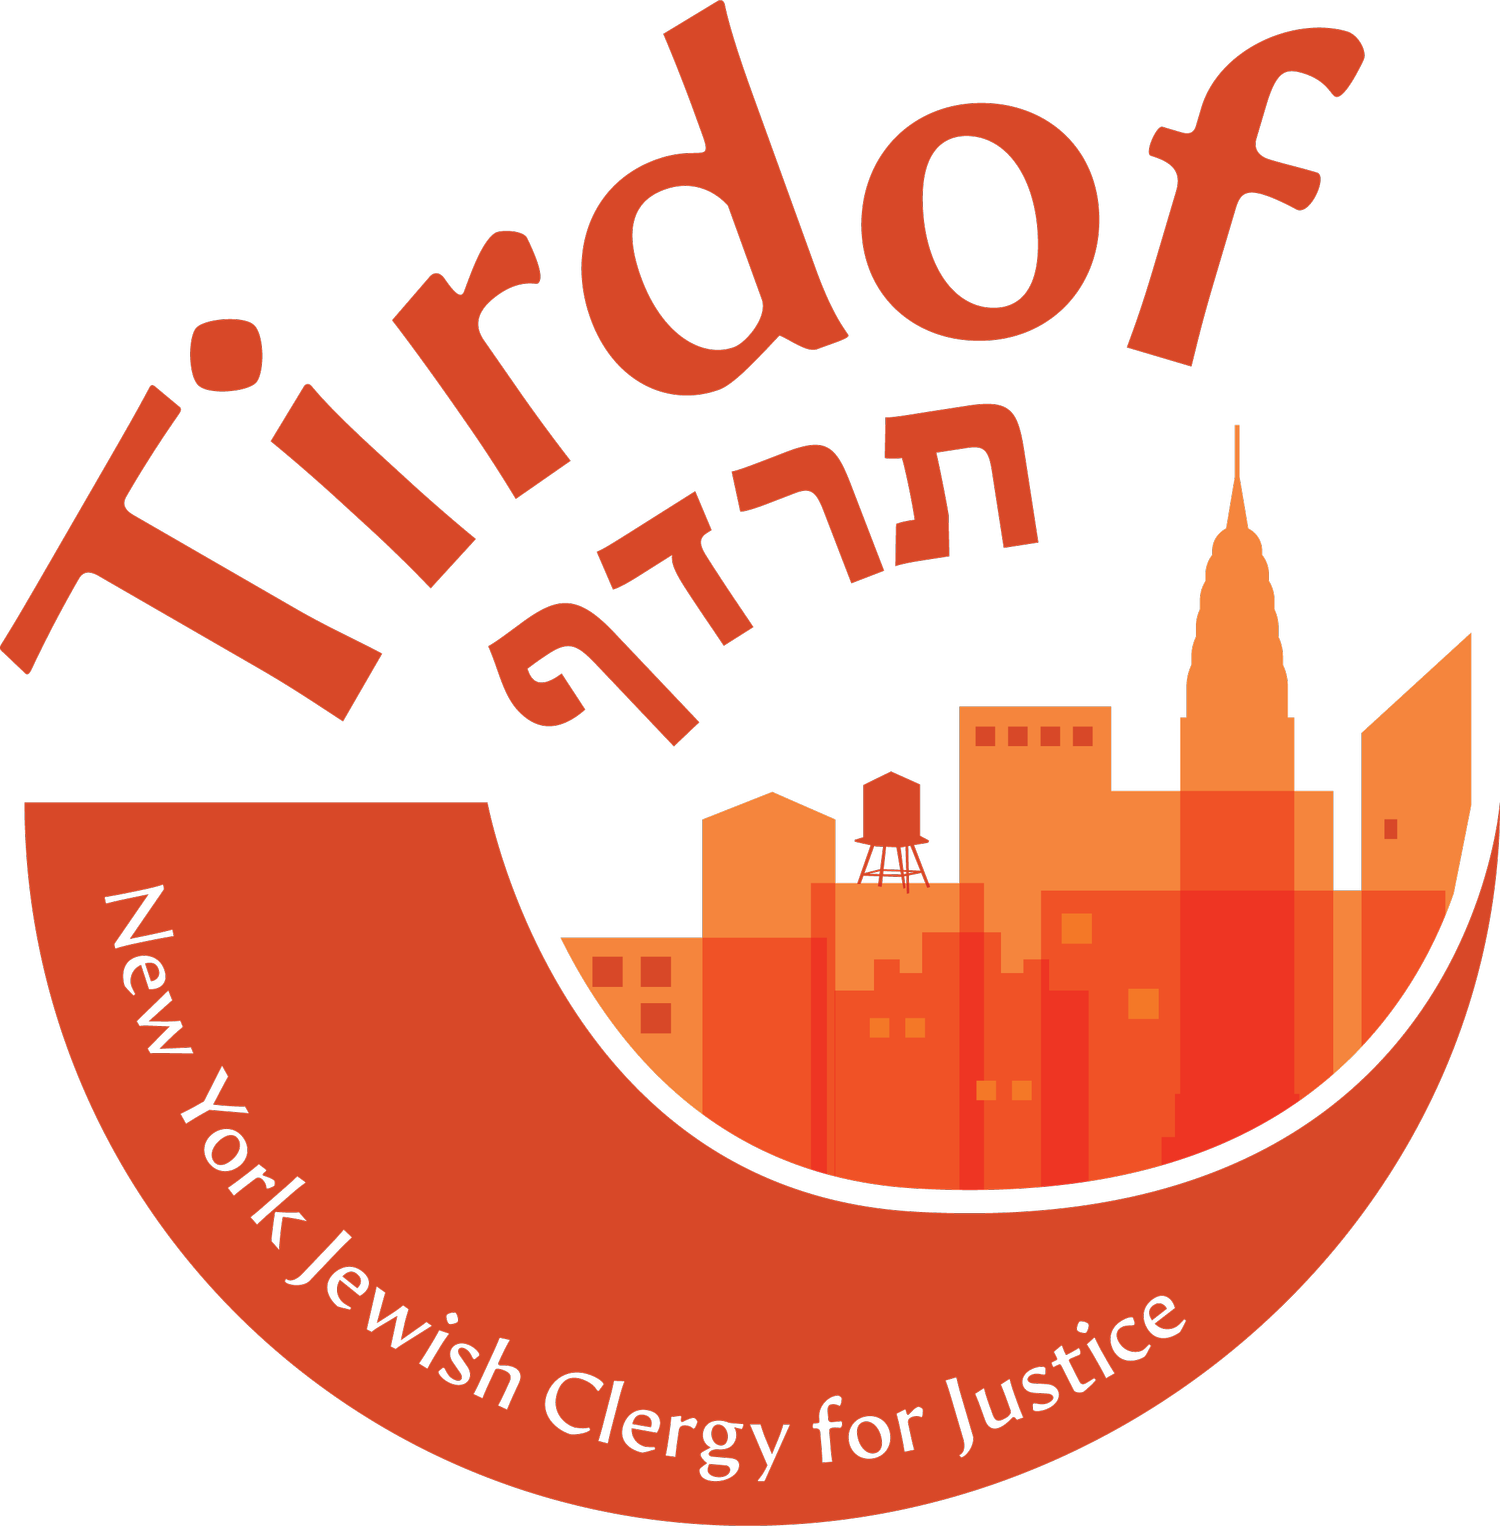 Tirdof: New York Jewish Clergy for Justice